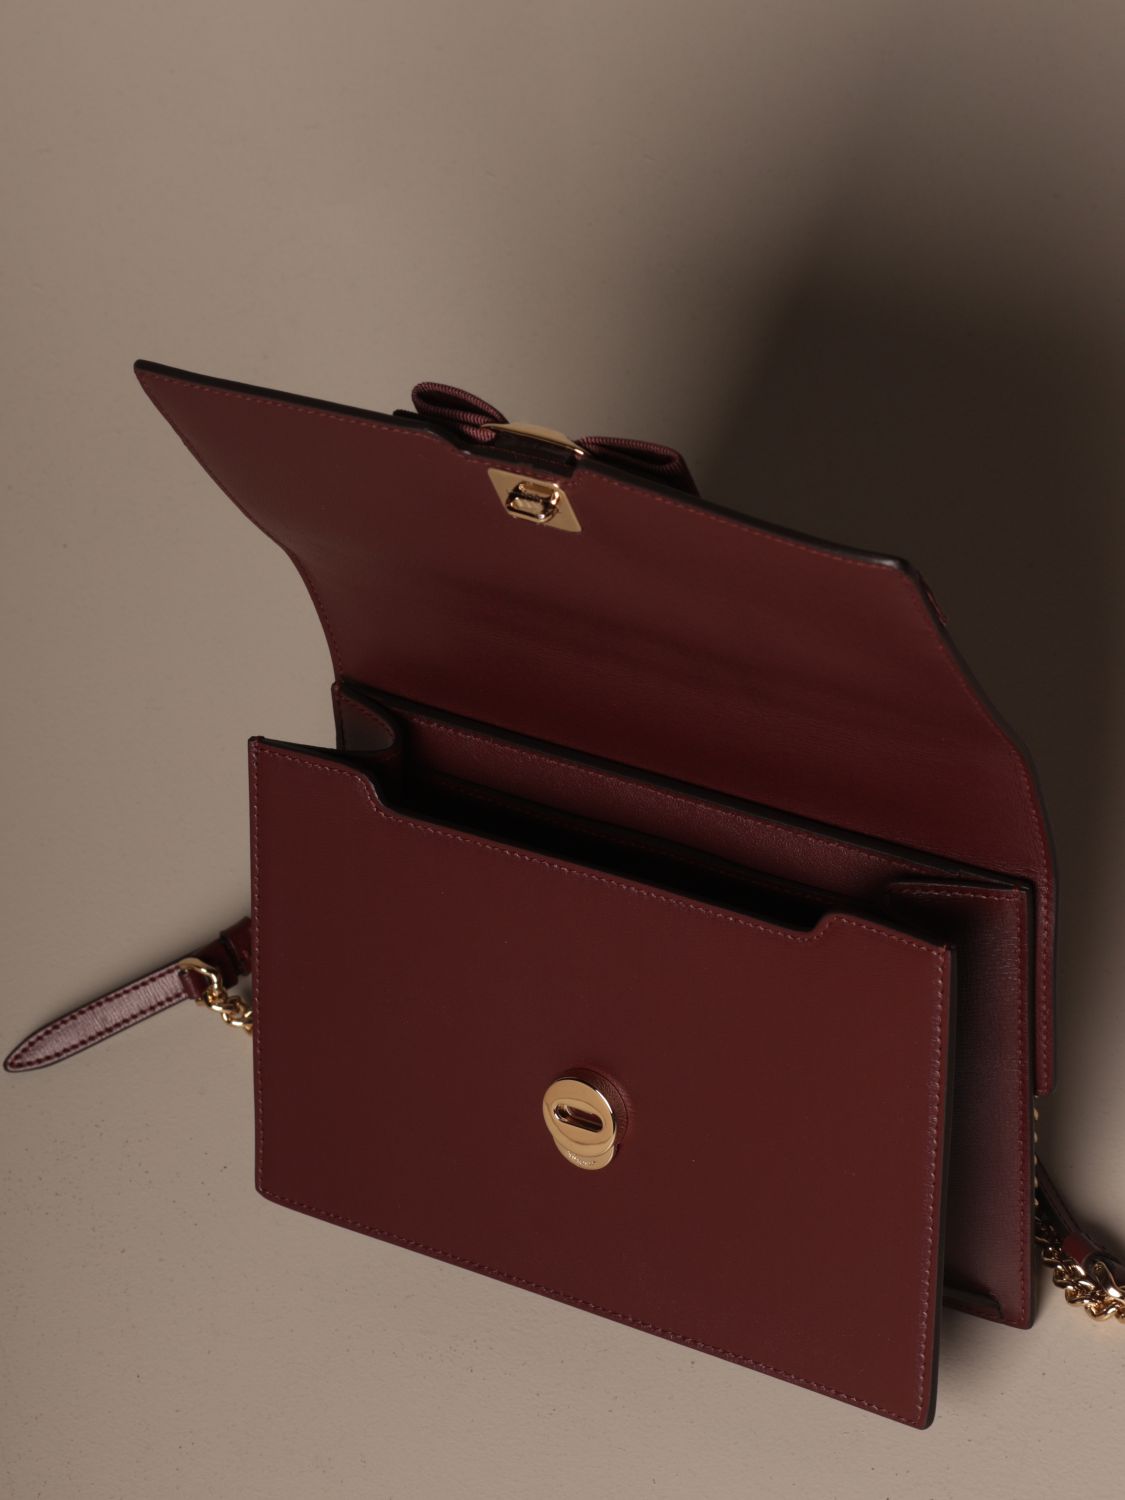 SALVATORE FERRAGAMO: leather bag with Vara bow | Shoulder Bag Salvatore ...